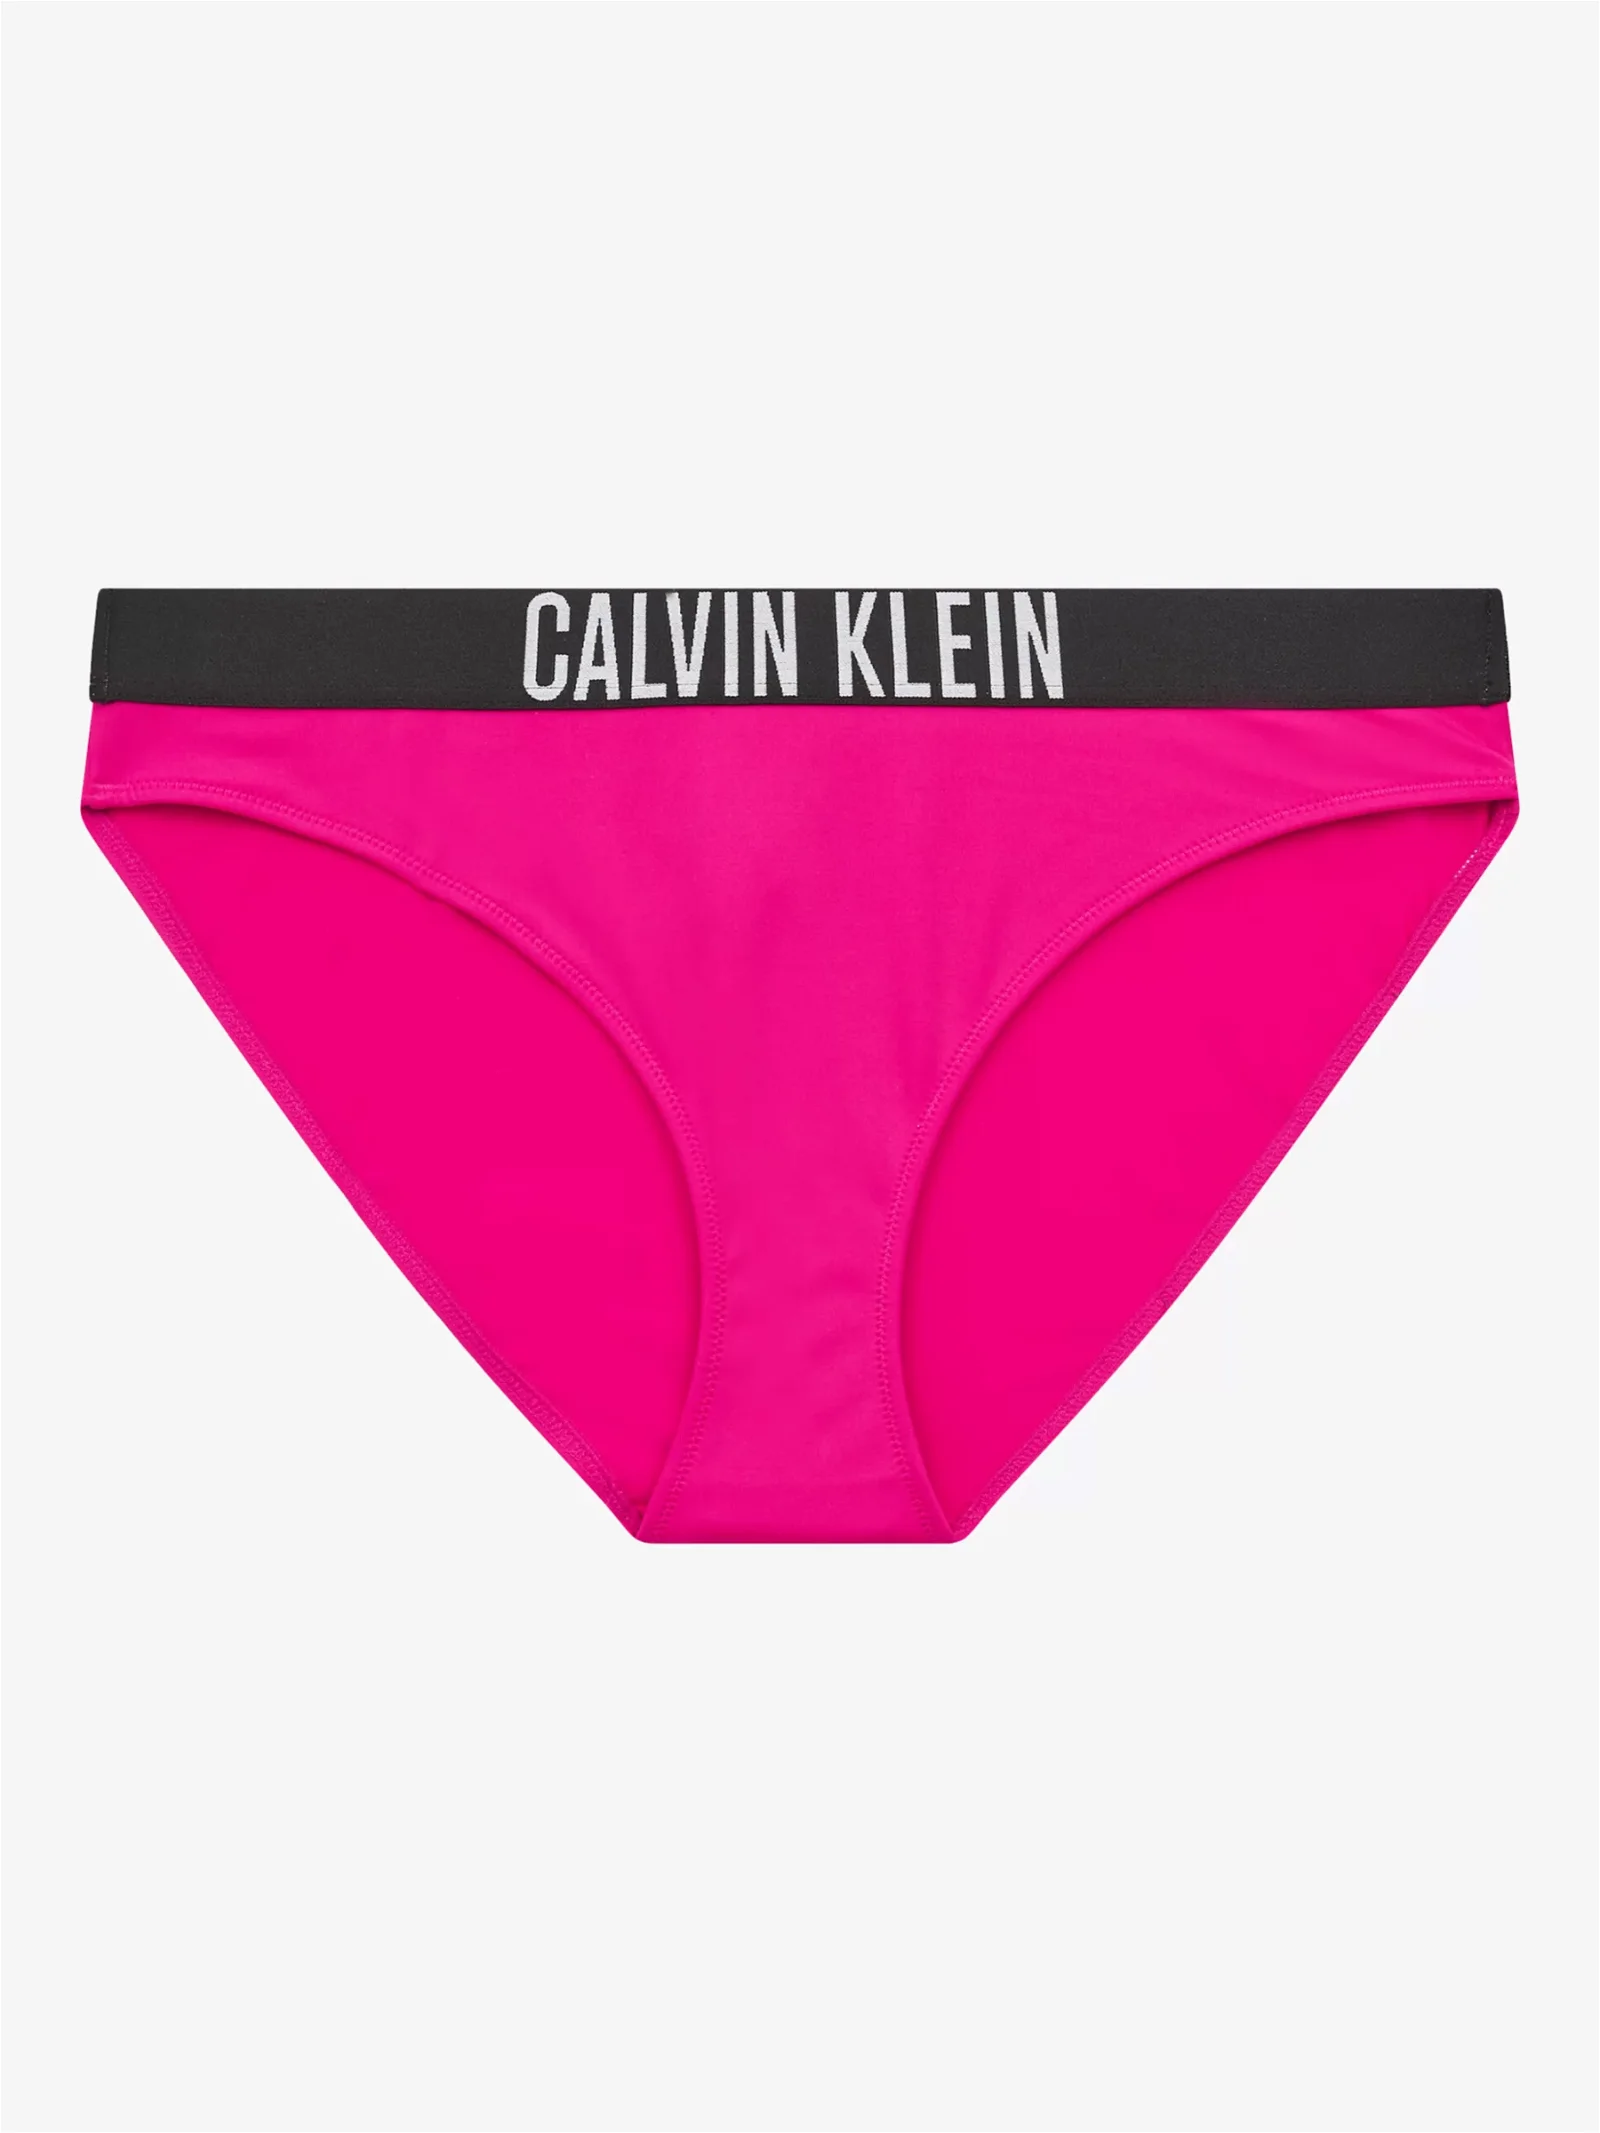 CALVIN KLEIN Intense Power Bikini Bottoms in Black